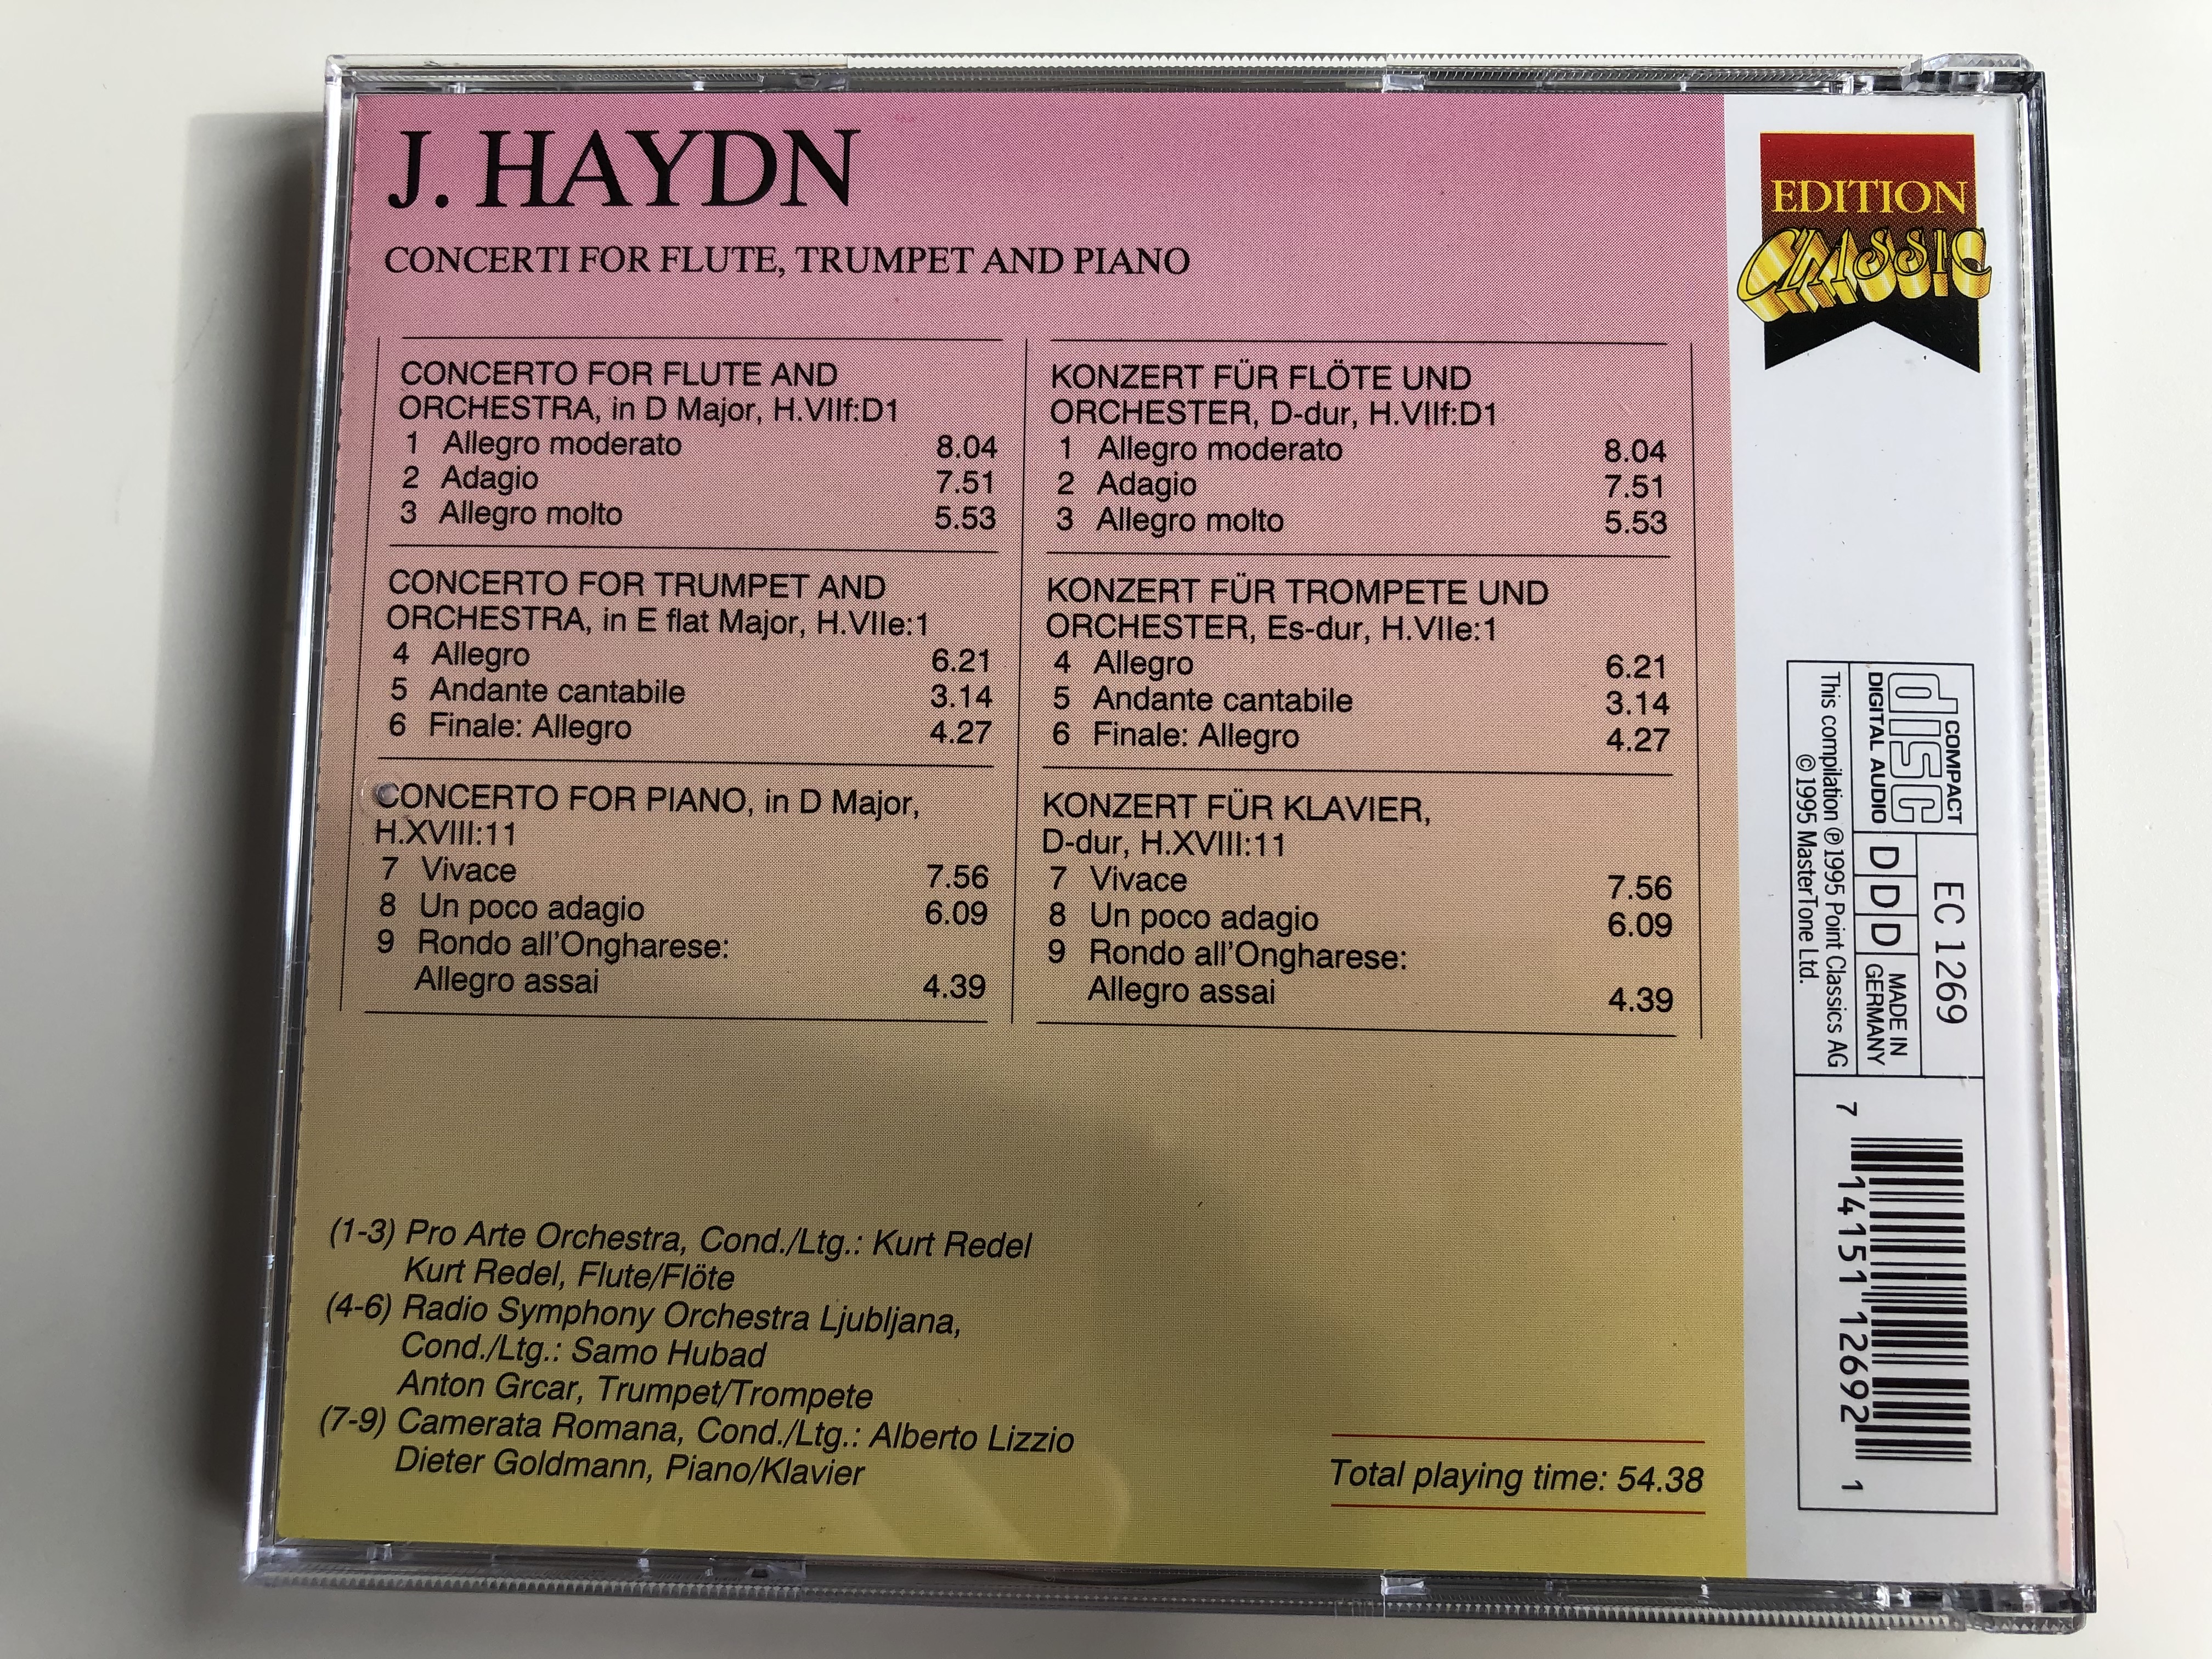 concerti-for-flute-trumpet-piano-haydn-edition-classic-audio-cd-1995-ec-1269-3-.jpg